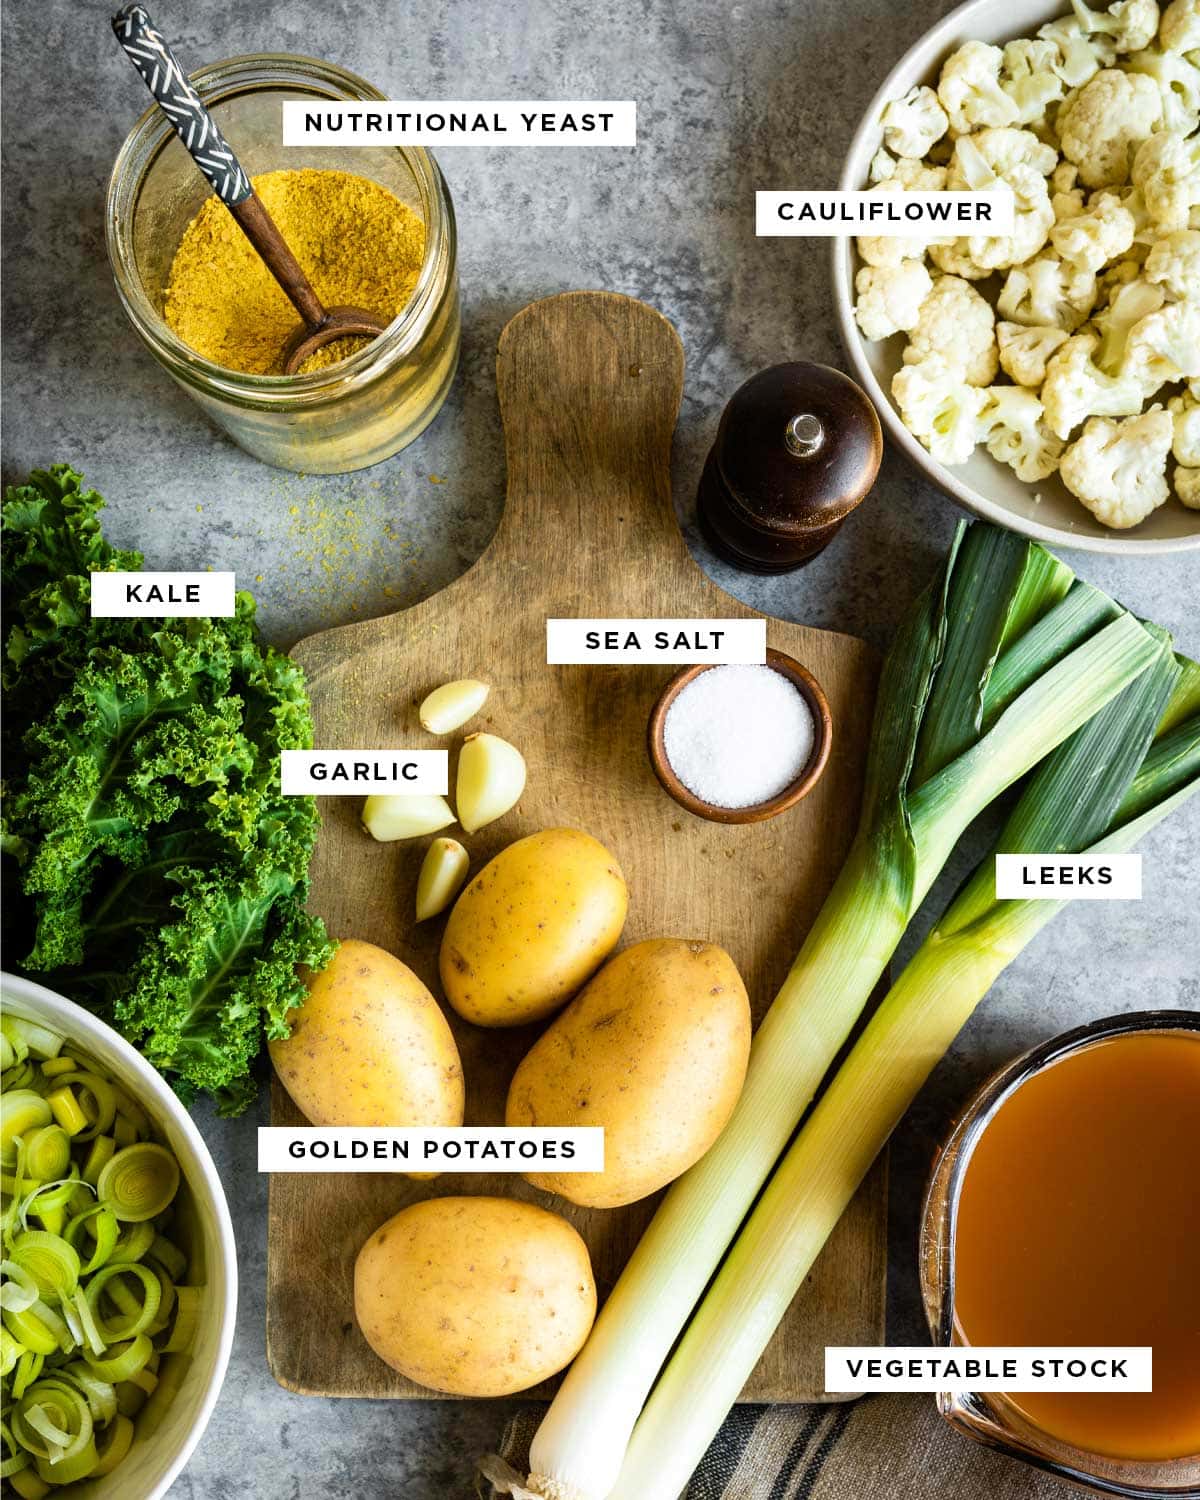 ingredients for potato soup including: nutritional yeast, cauliflower, kale, sea salt, garlic, leeks, golden potatoes and vegetable stock